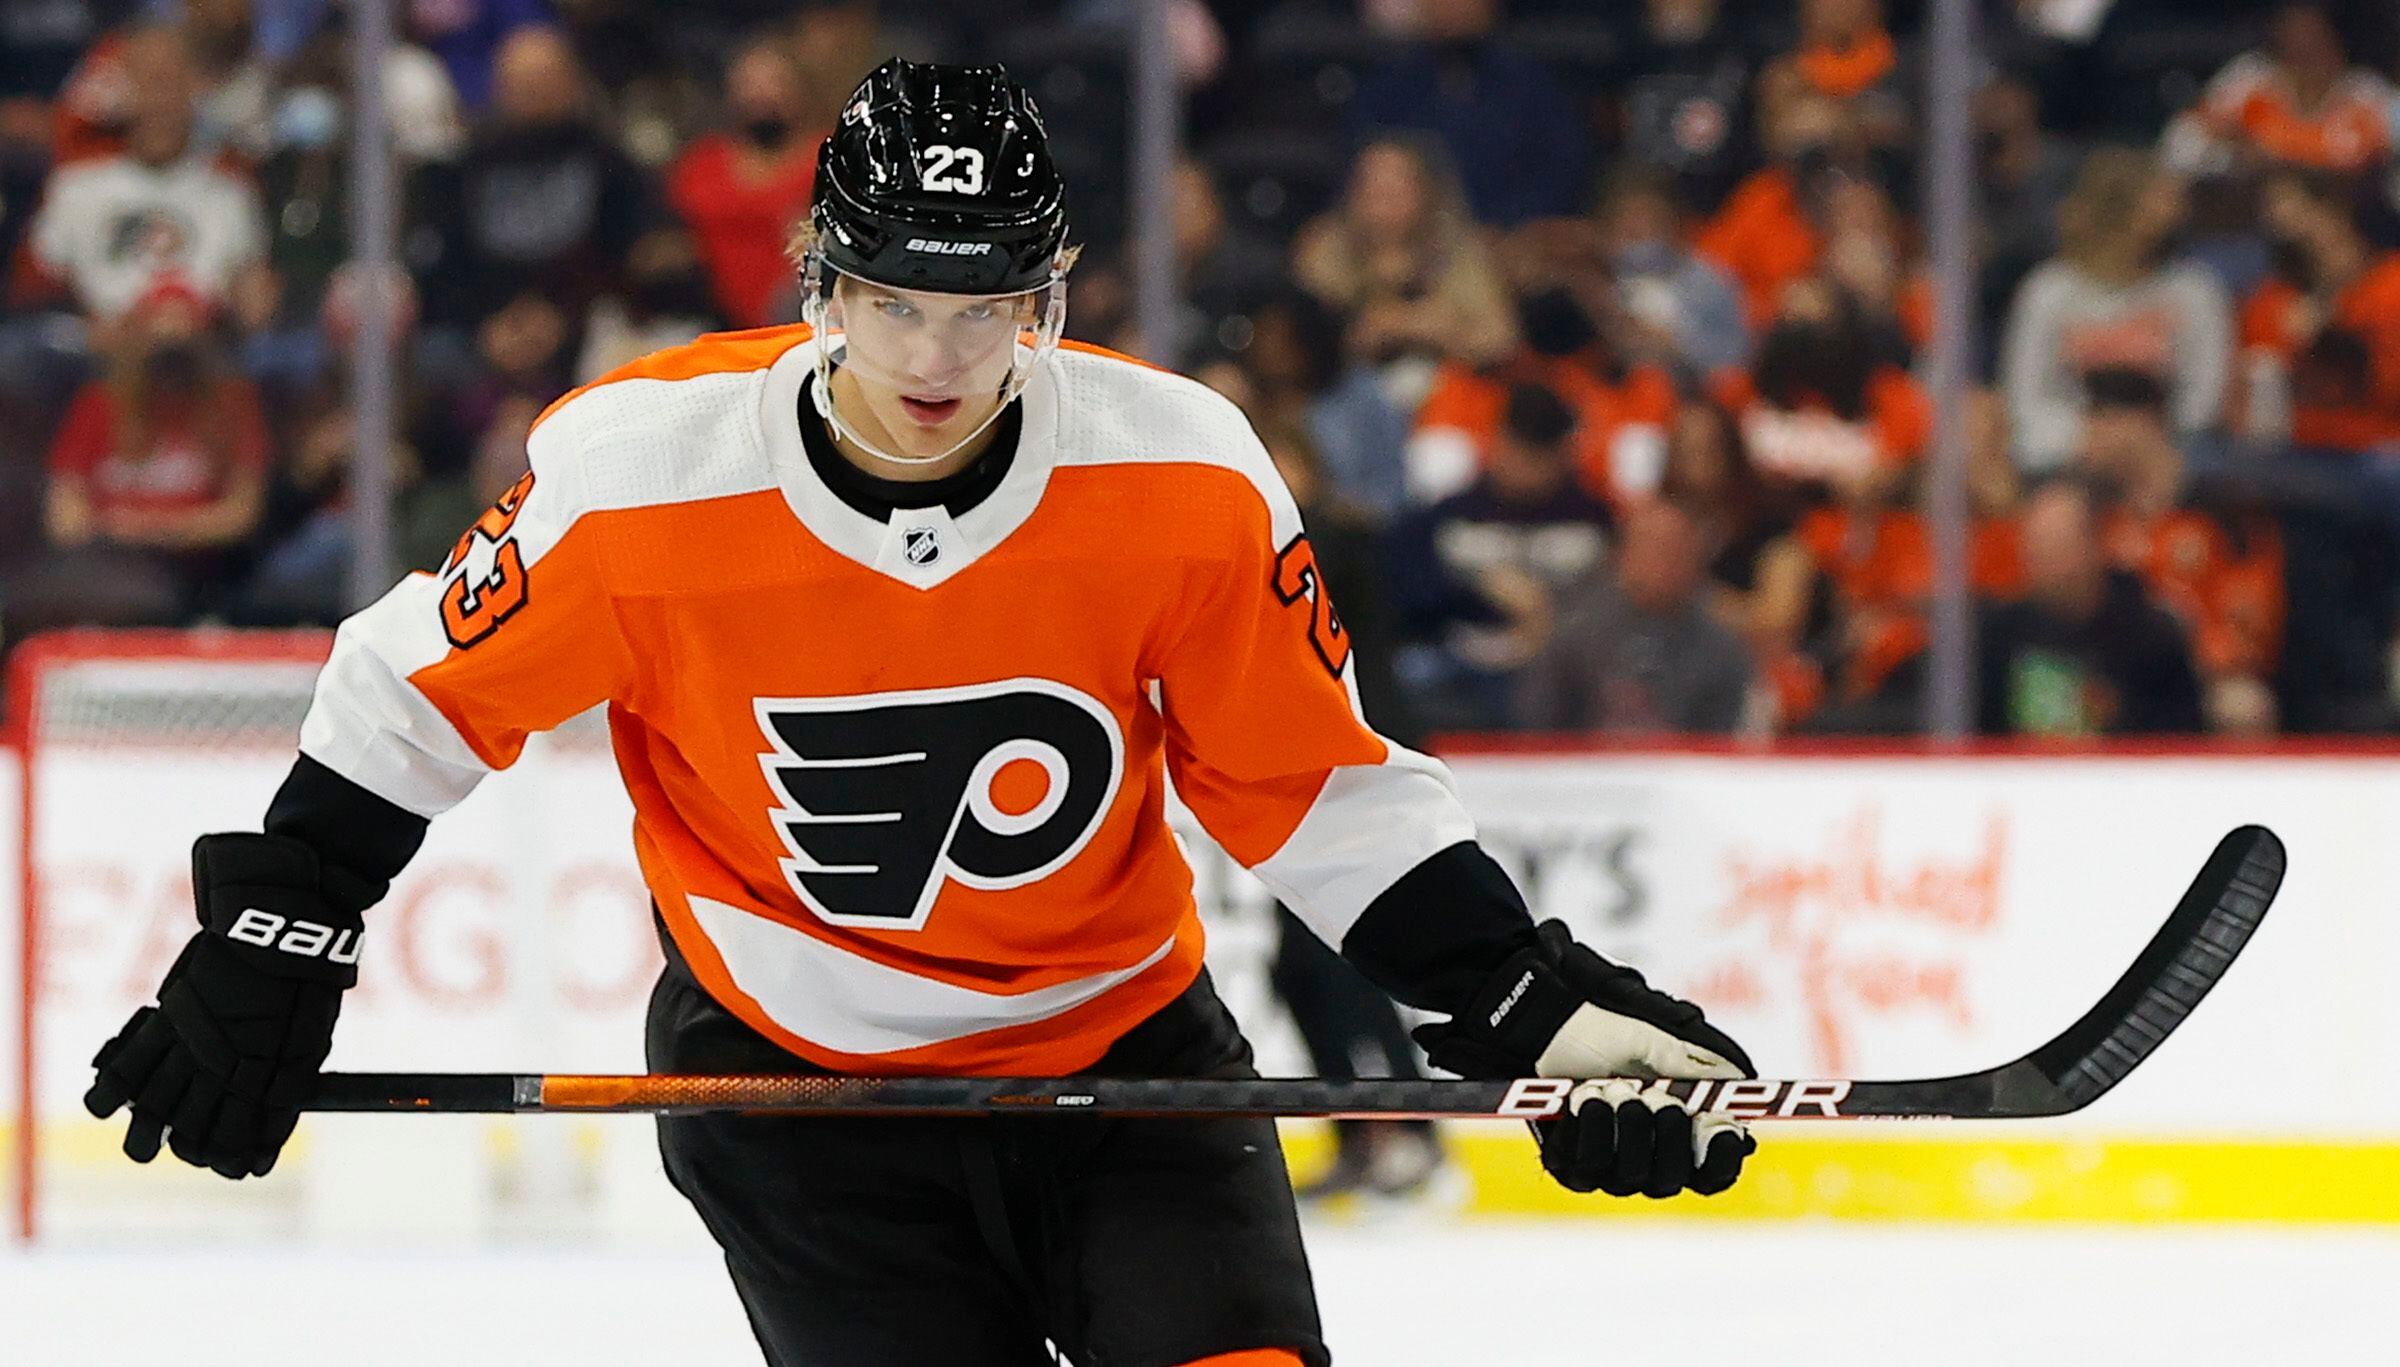 Philadelphia Flyers' Oskar Lindblom returns to ice for Game 6 after cancer  battle - 6abc Philadelphia